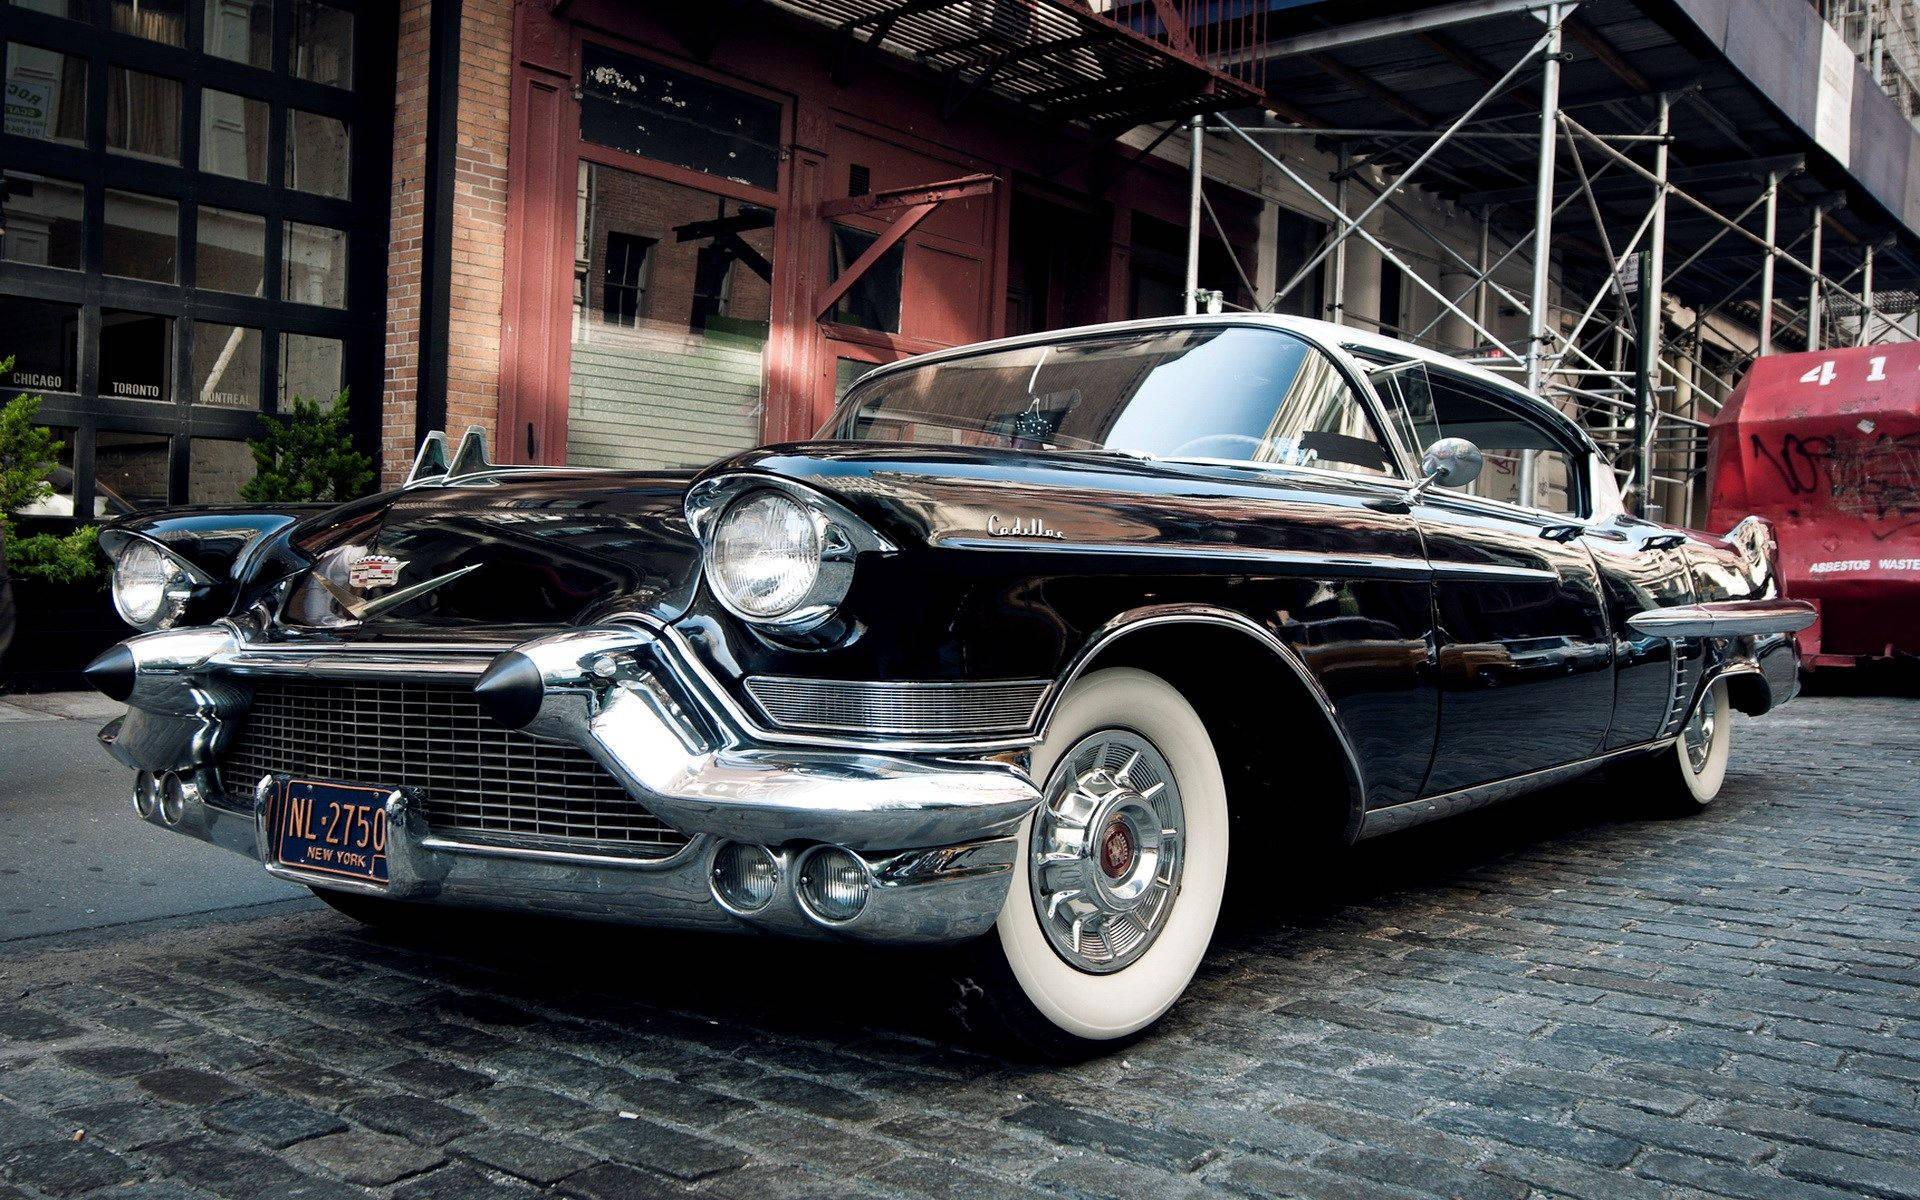 Black Classic Vintage Cadillac